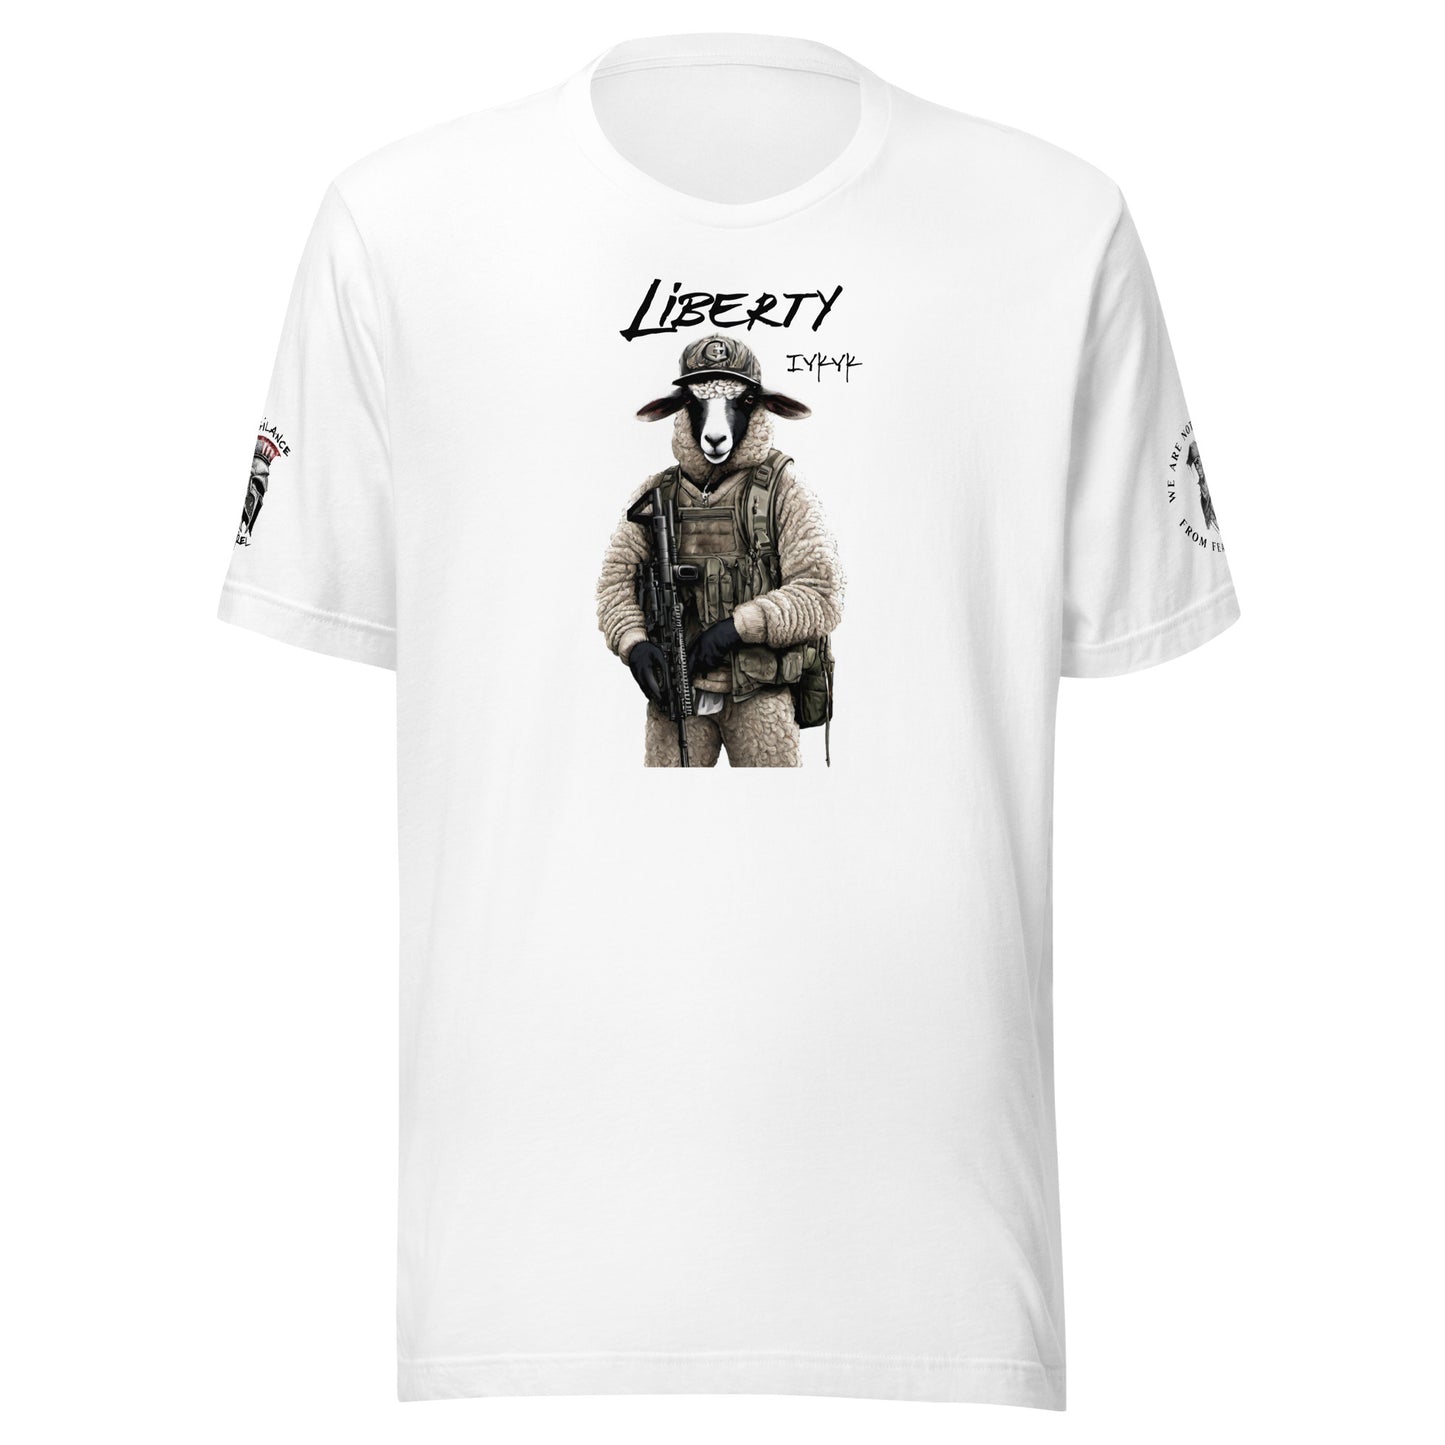 Liberty Lamb IYKYK (logo & minuteman sleeve) Limited Men's T-Shirt White